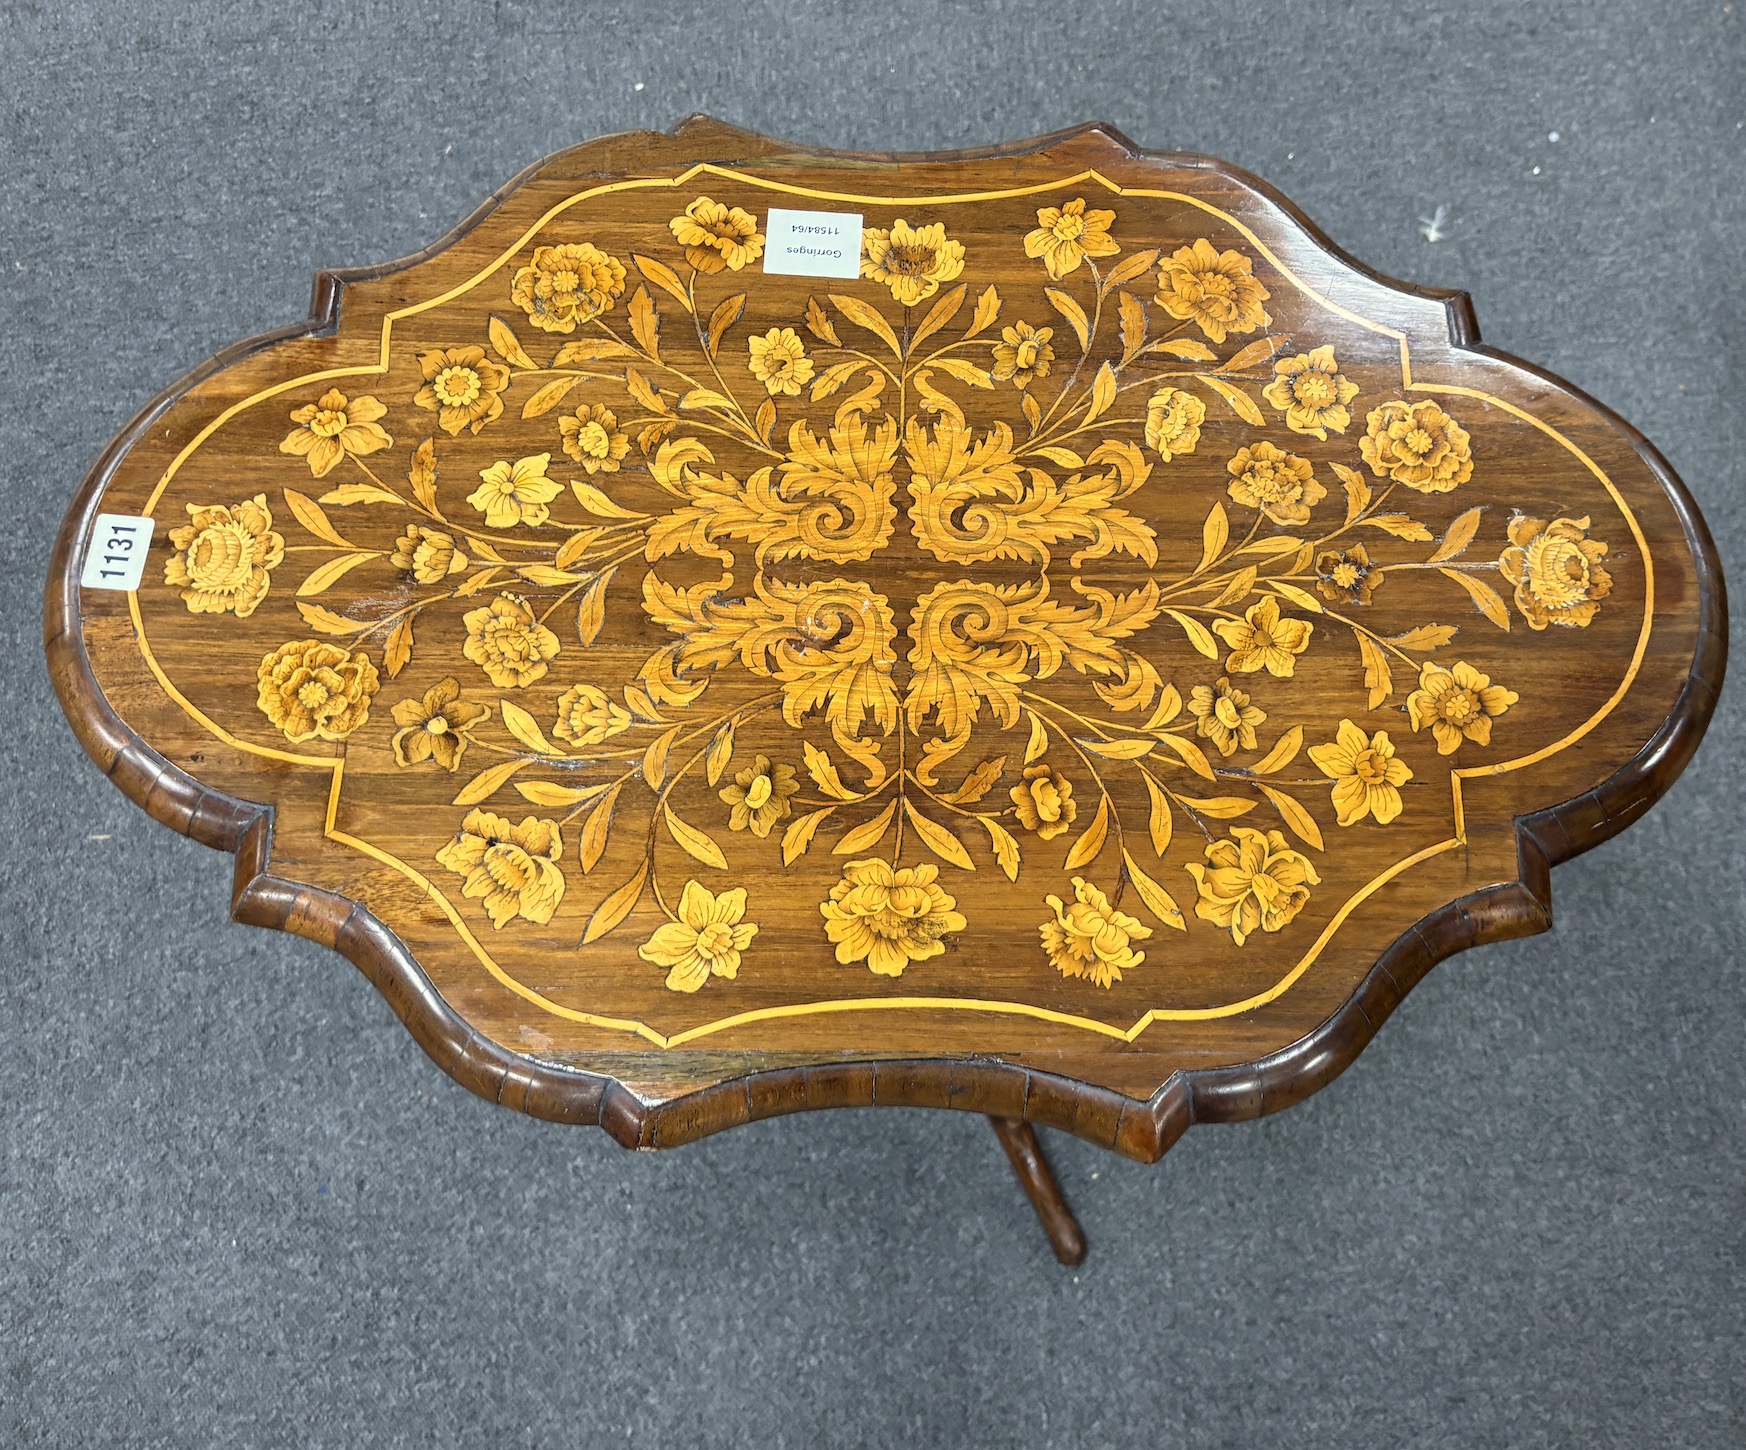 A 19th century Dutch floral marquetry inlaid walnut tilt top tripod table, width 67cm, depth 45cm, height 65cm